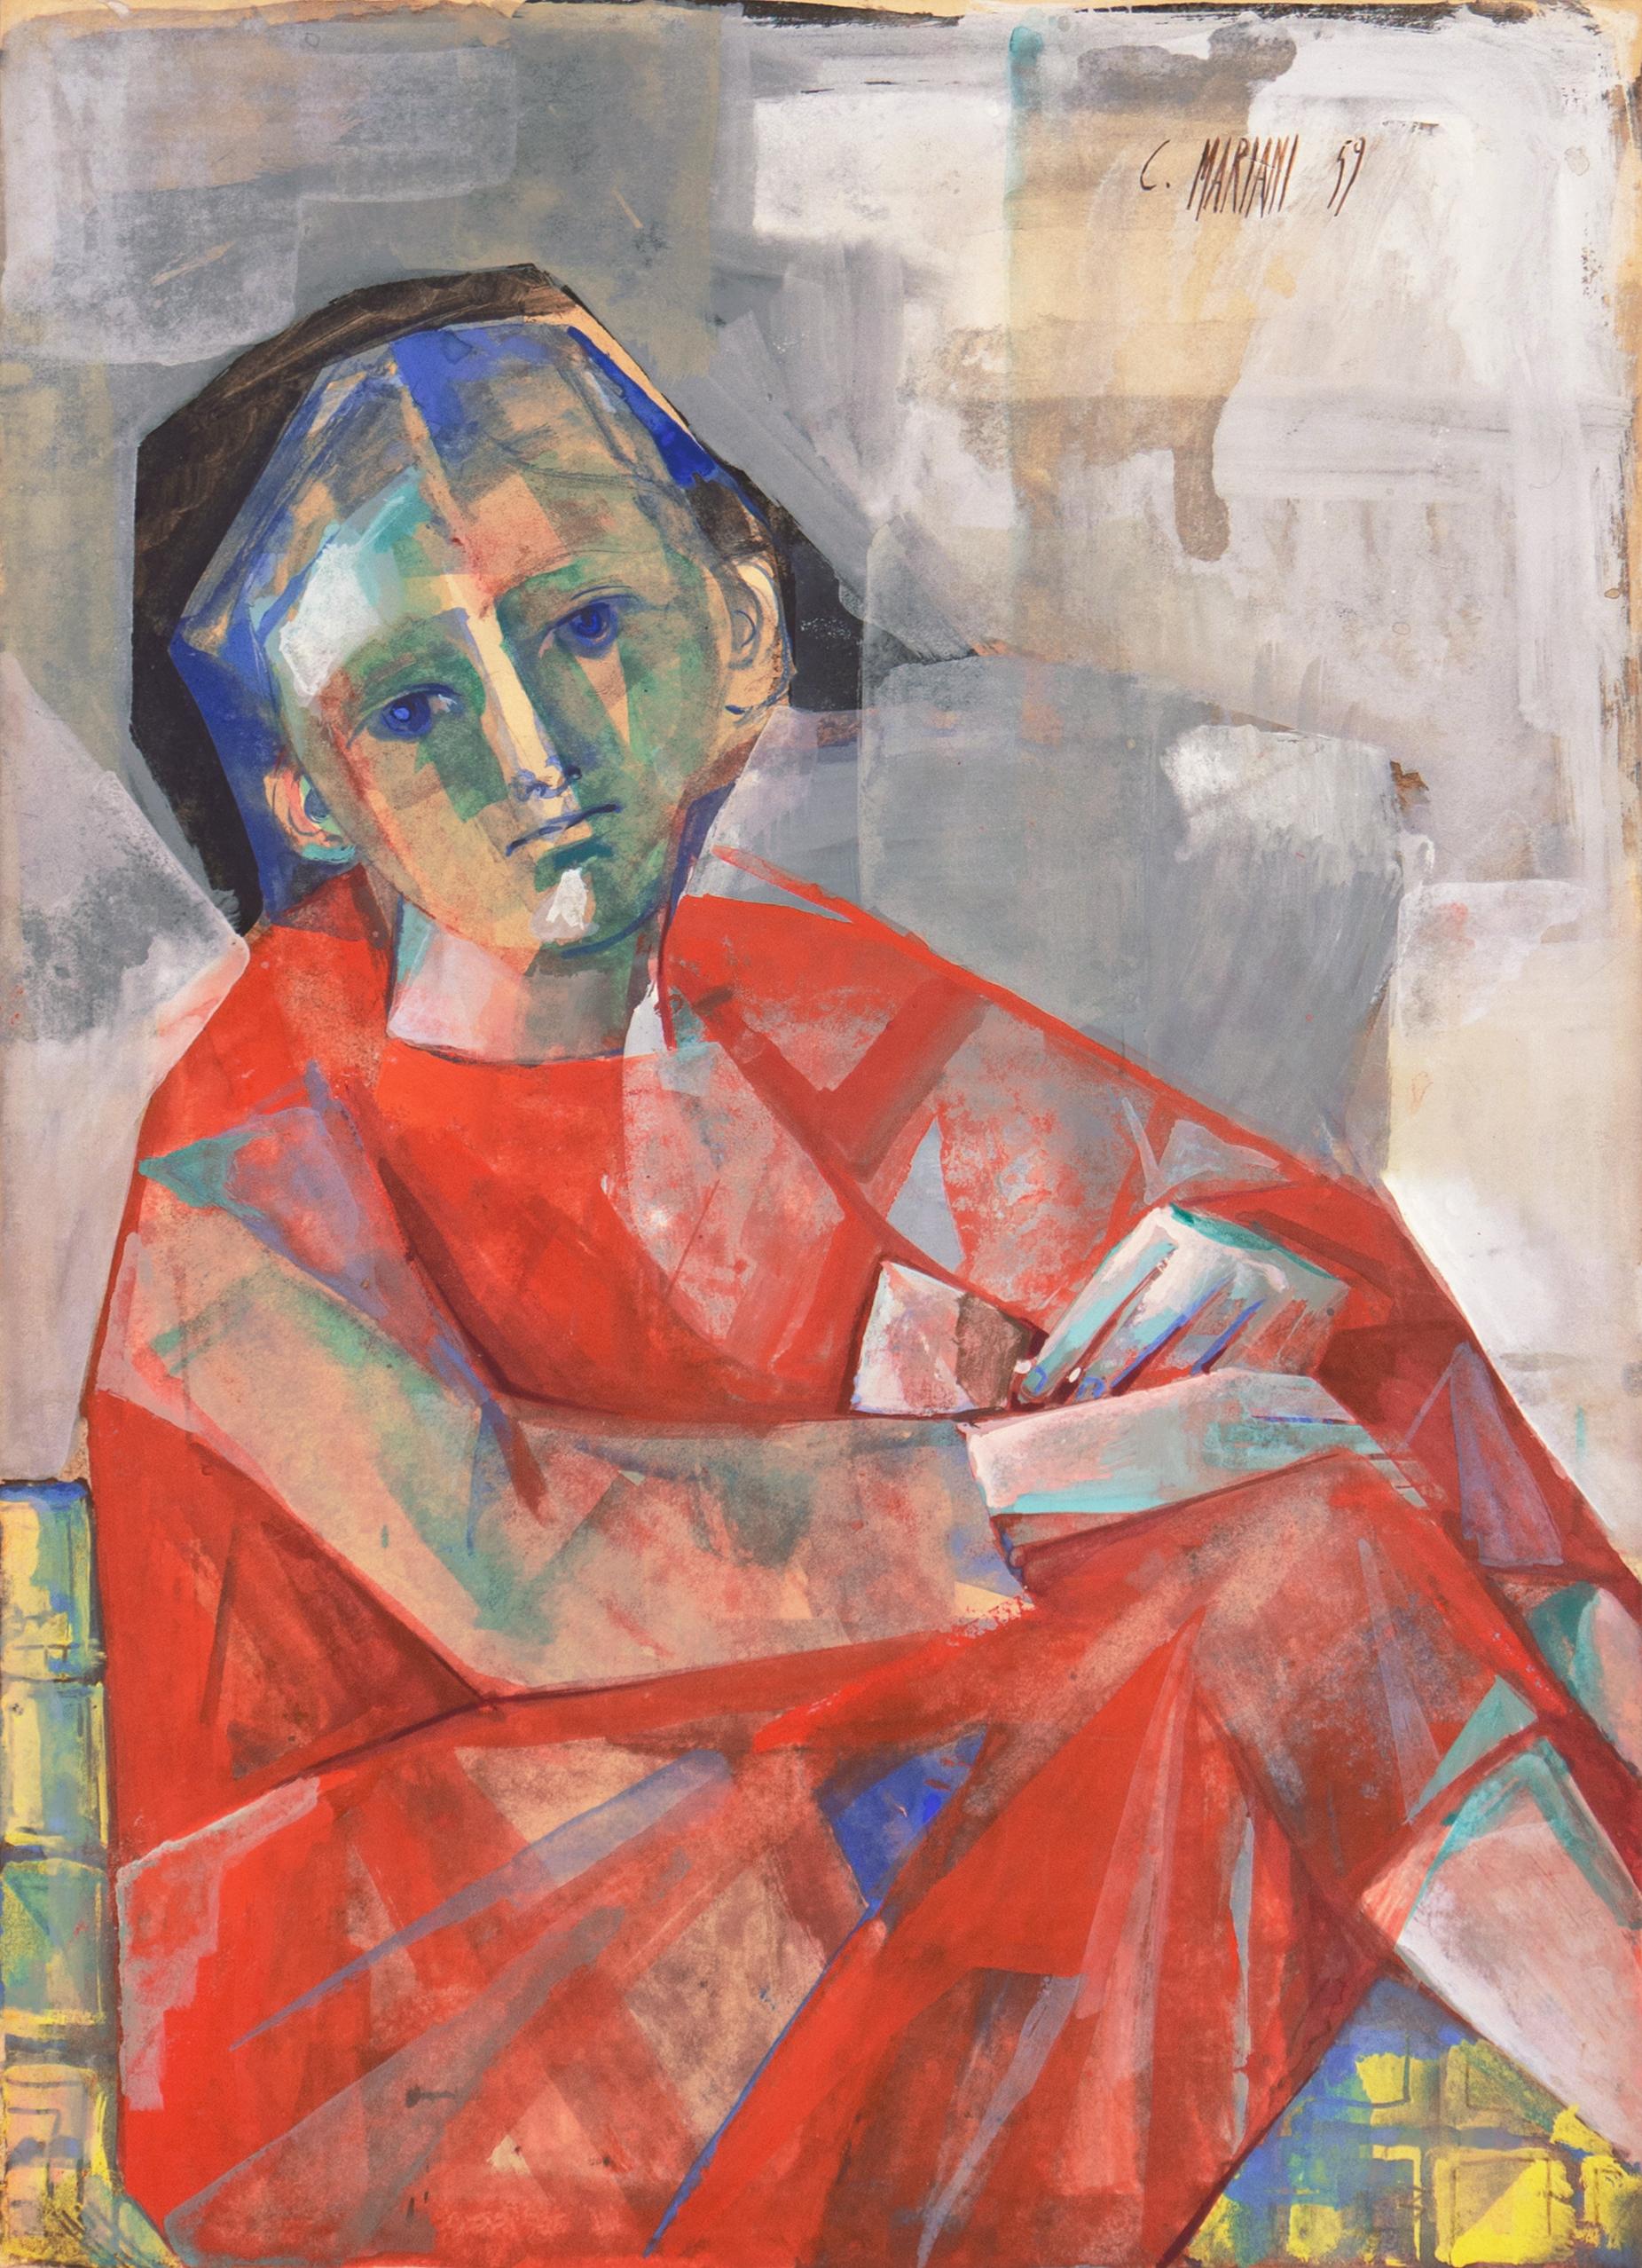 Carlo Maria Mariani Portrait - 'Girl in Red', Guggenheim, LACMA, Rome, Academy of Fine Arts, Venice Biennale